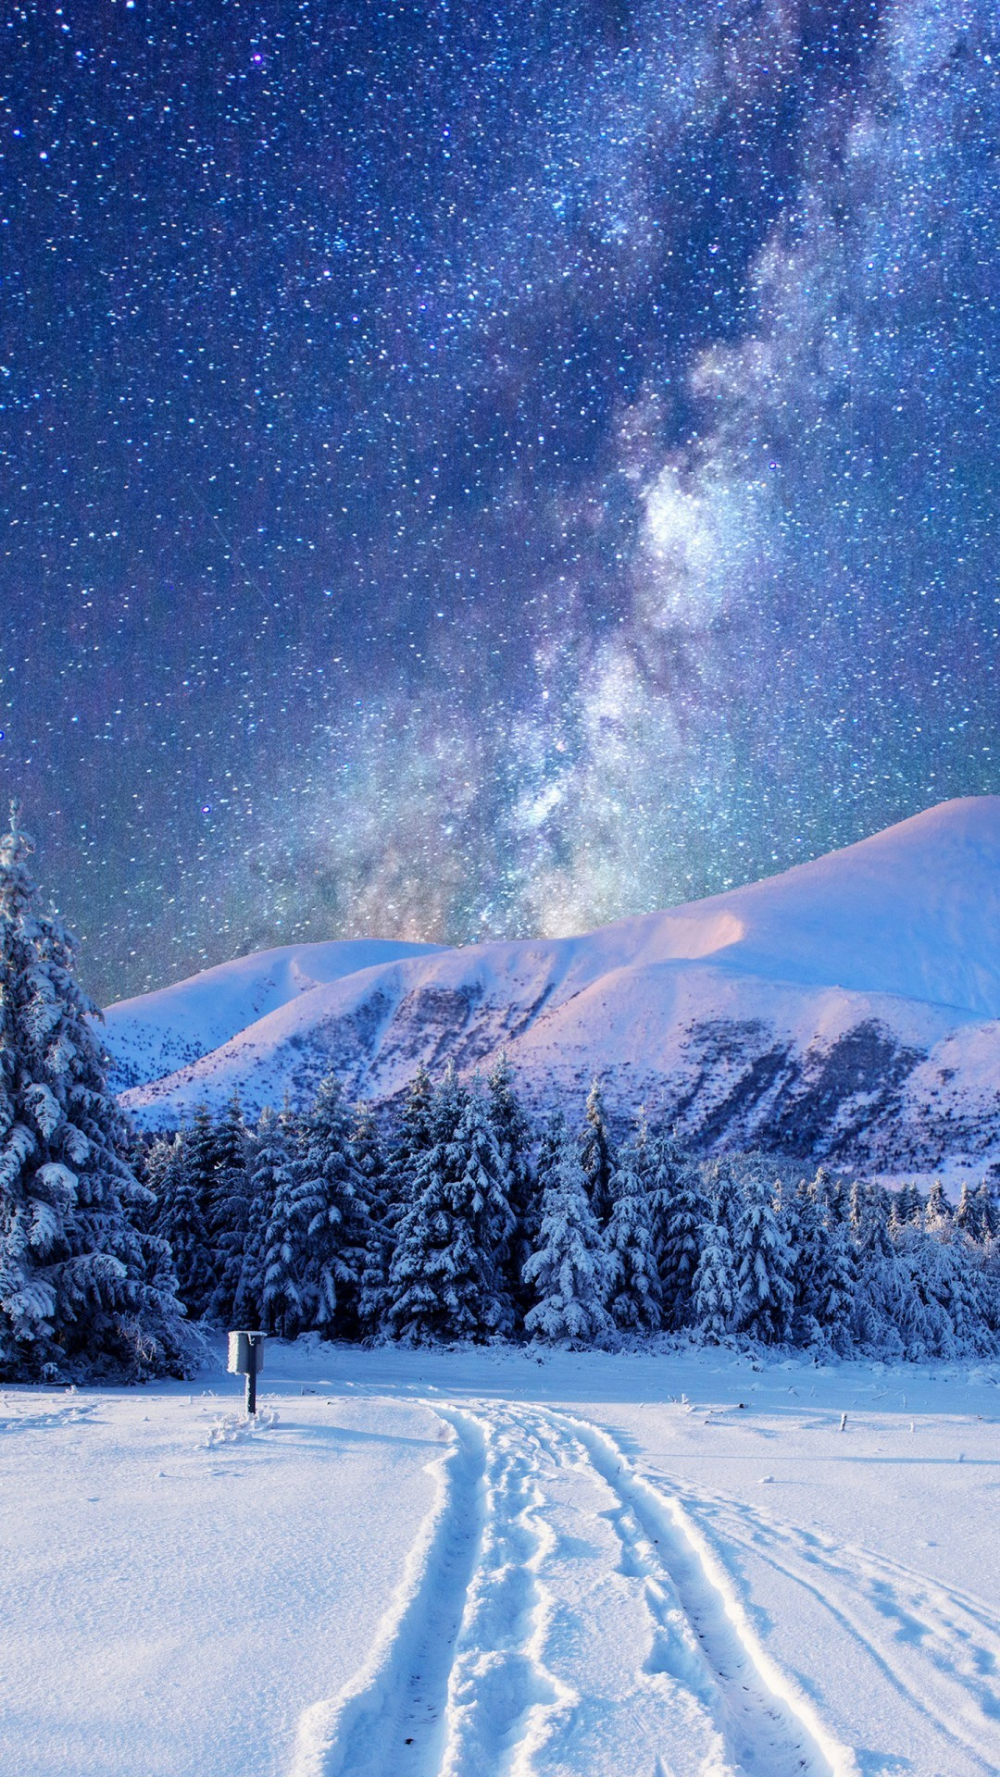 Best Winter Wallpaper for iPhone. iPhone wallpaper winter, Winter wallpaper hd, Winter landscape